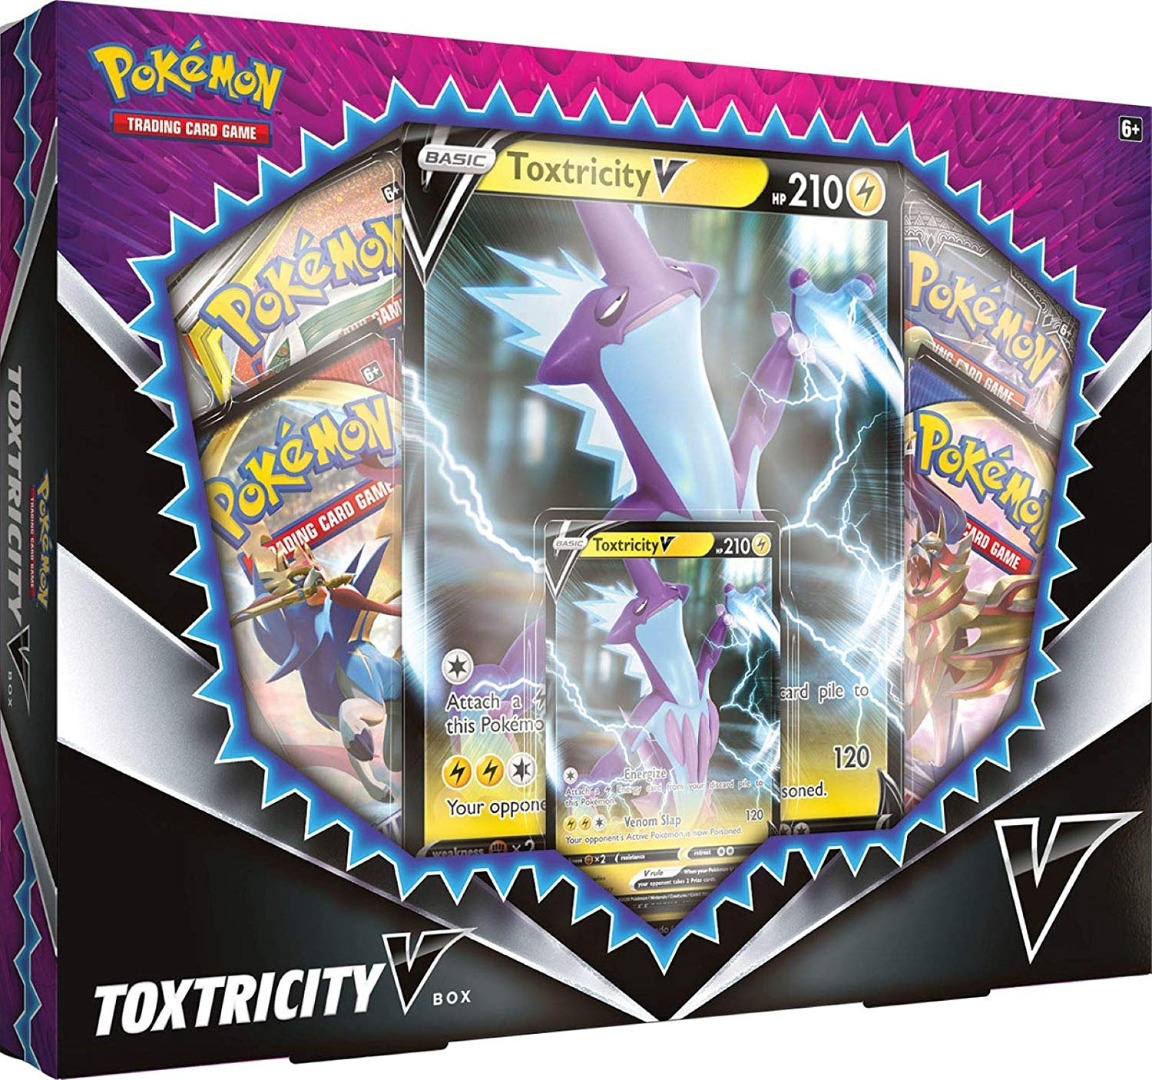 Pokémon - Toxtricity V Box/February V Box Collectors Edition - English